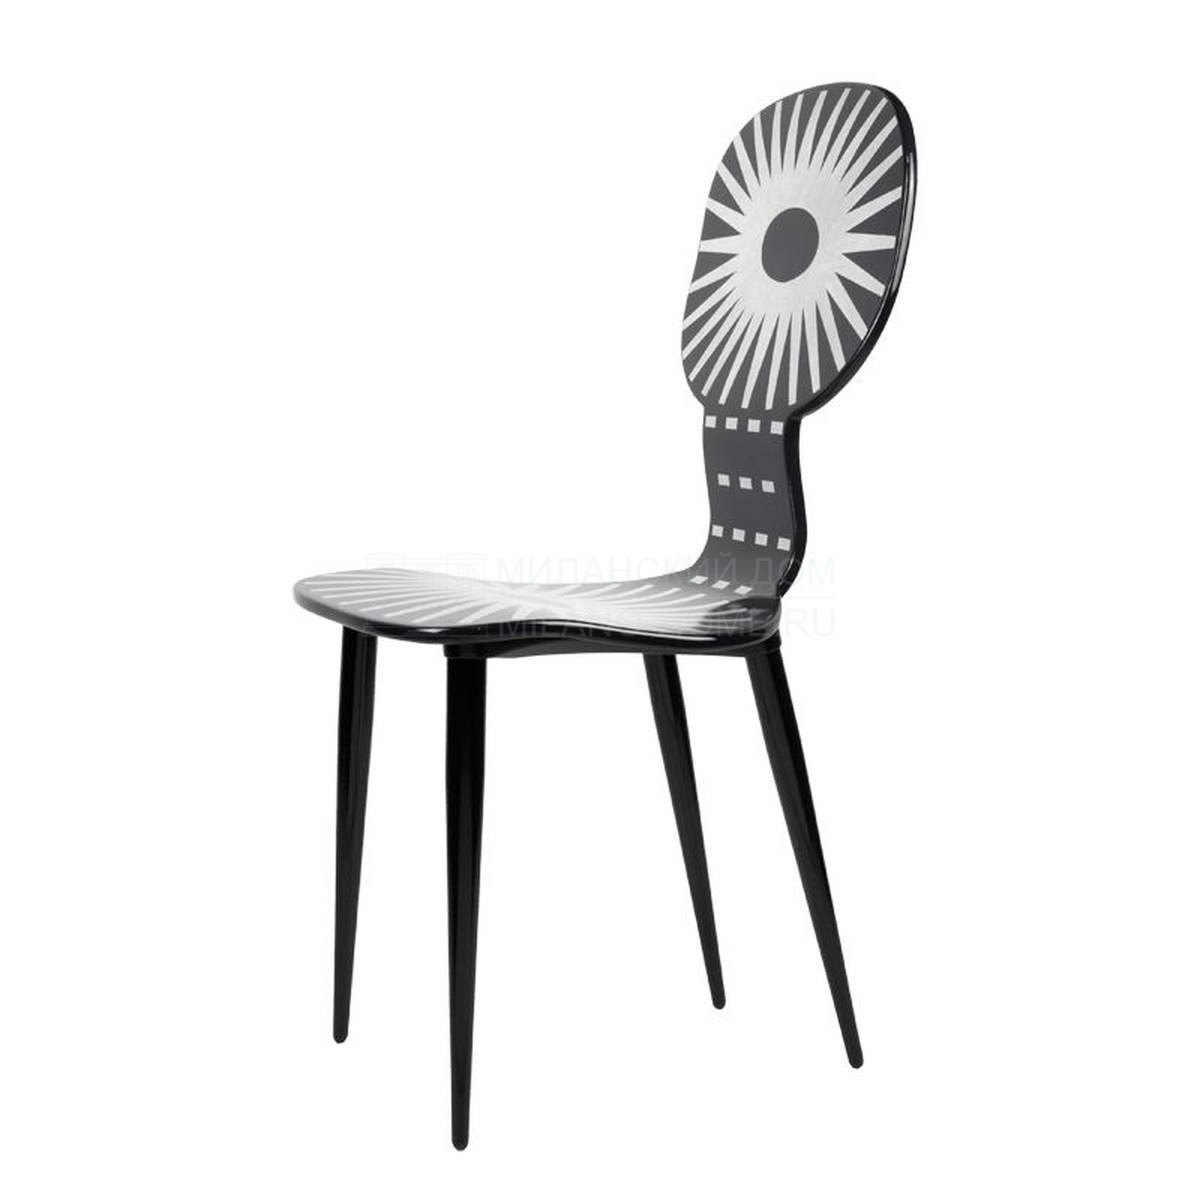 Металлический / Пластиковый стул Raggiera из Италии фабрики FORNASETTI